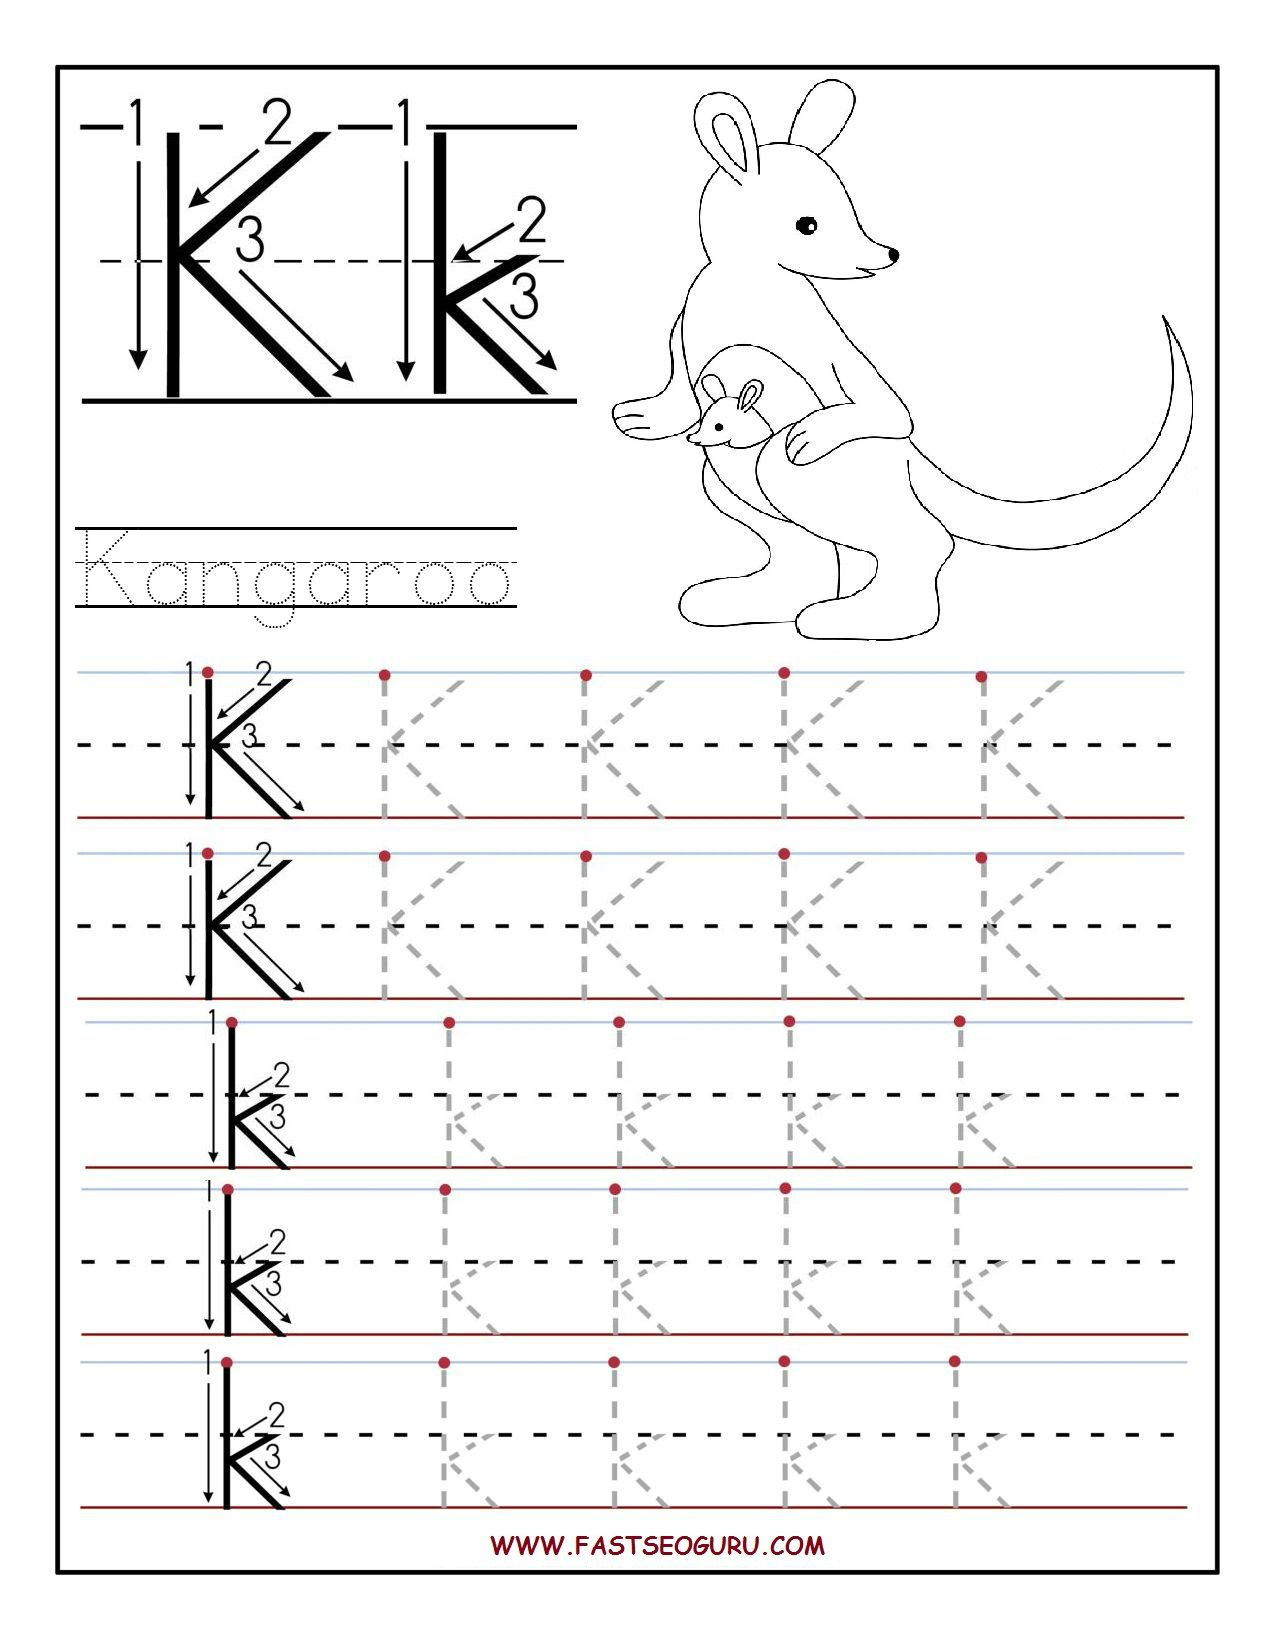 Printable Letter K Tracing Worksheets For Preschool